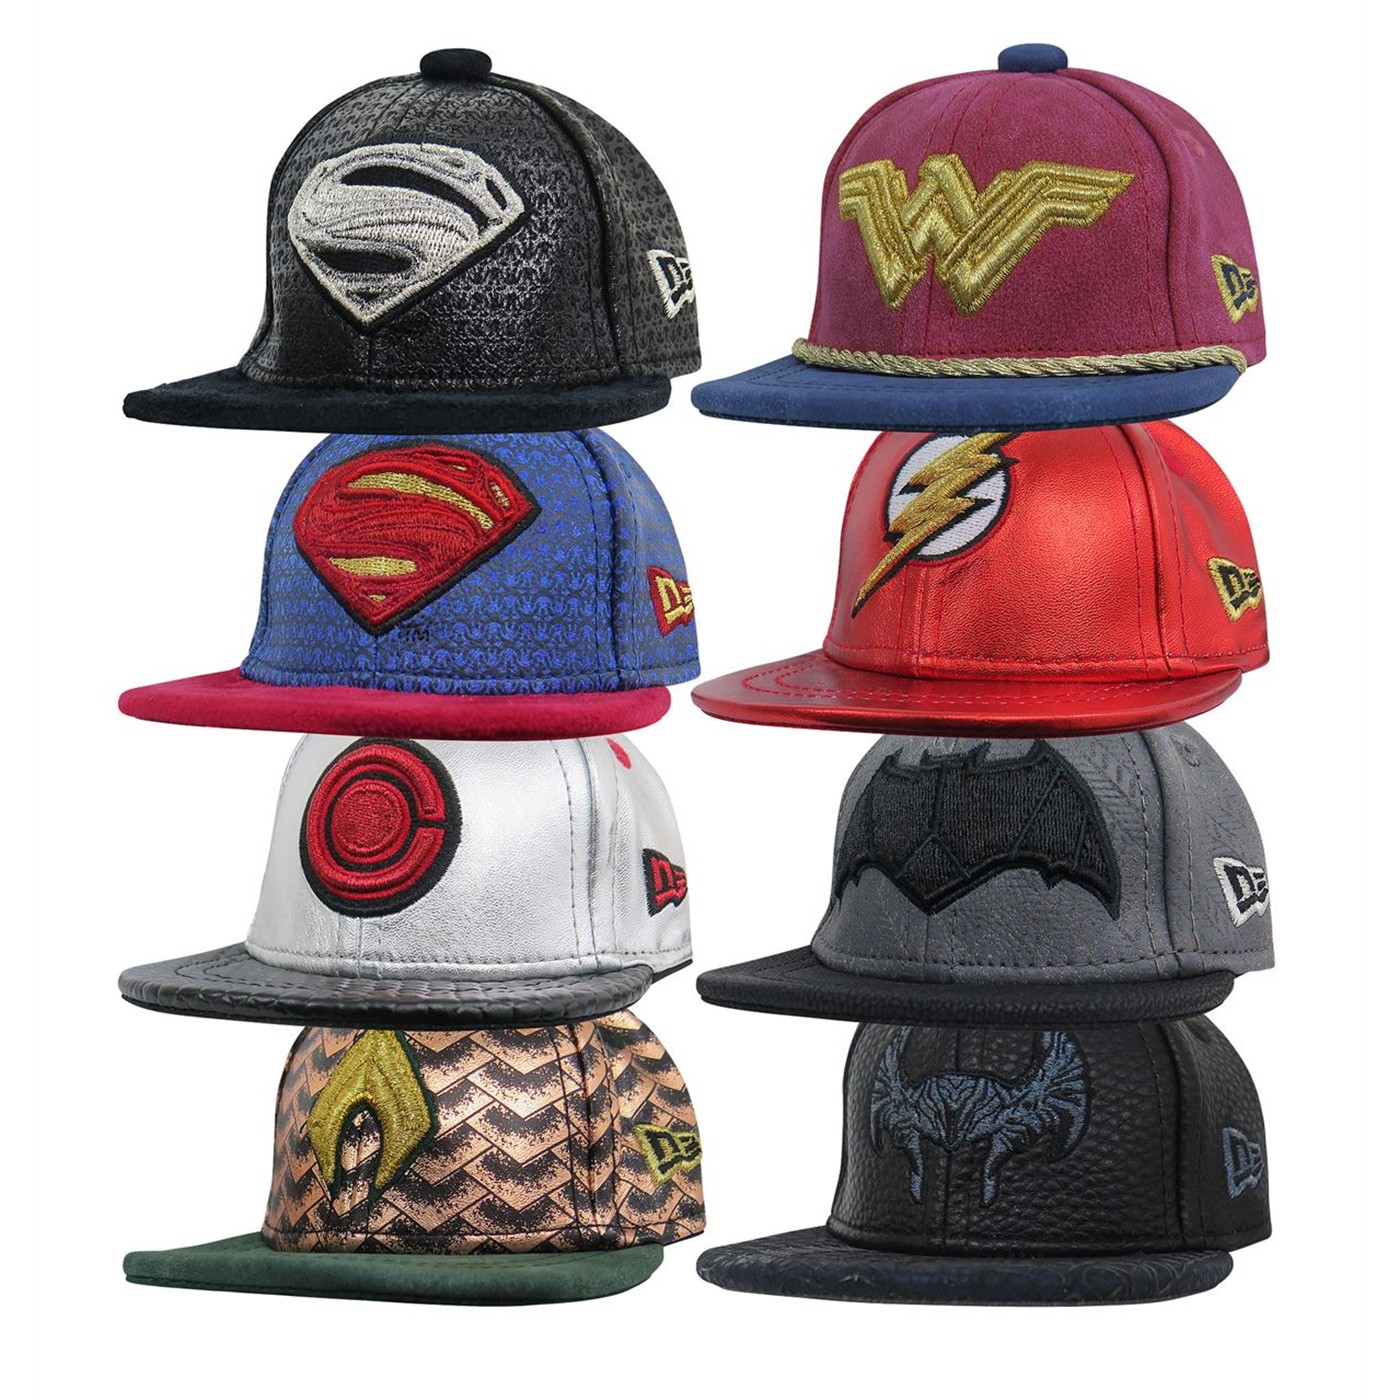 Justice League Movie Armor New Era Mini Hat Set of 8